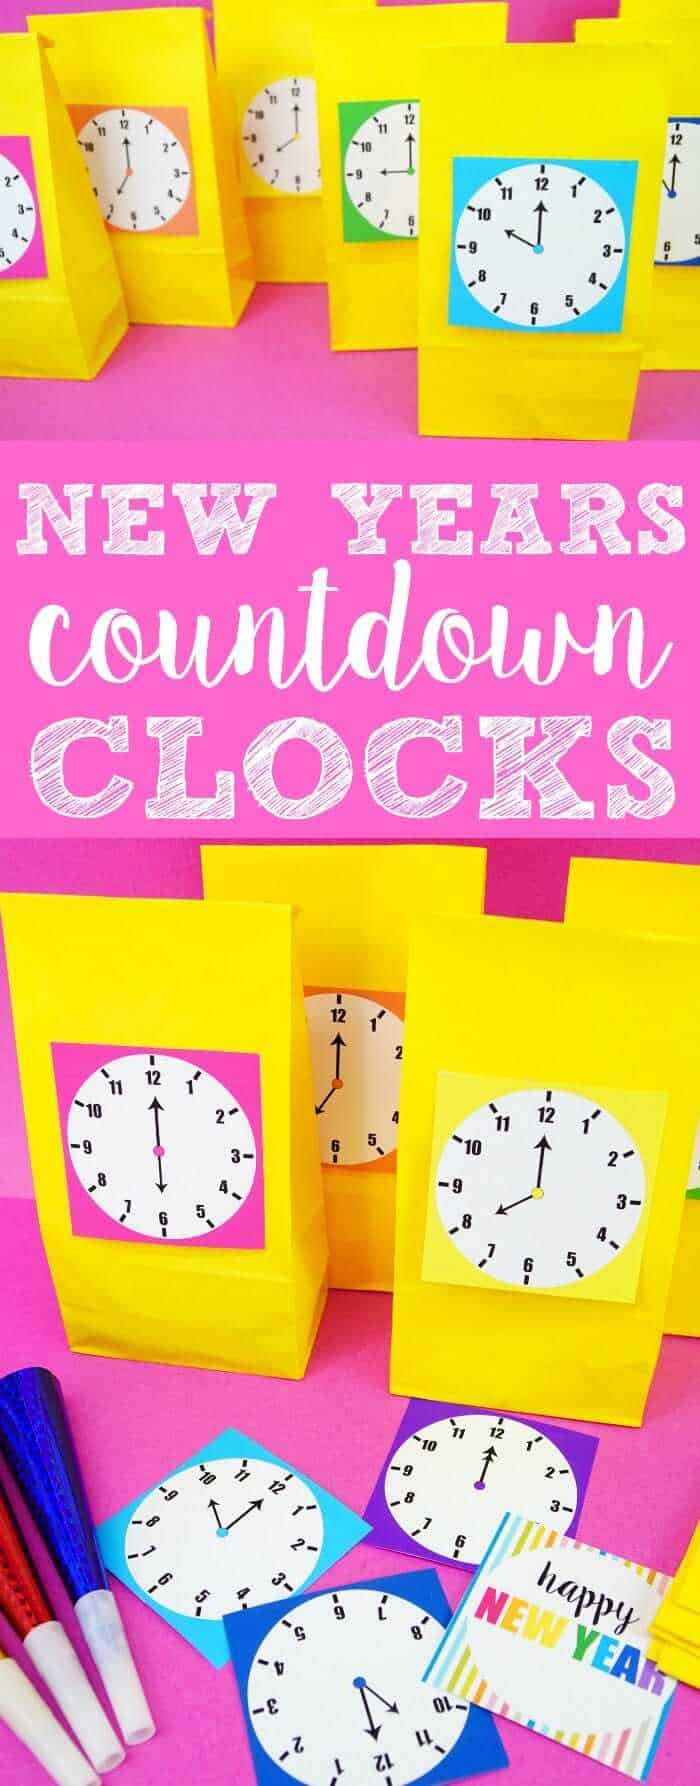 New Years Eve Countdown Clocks Vertical Image